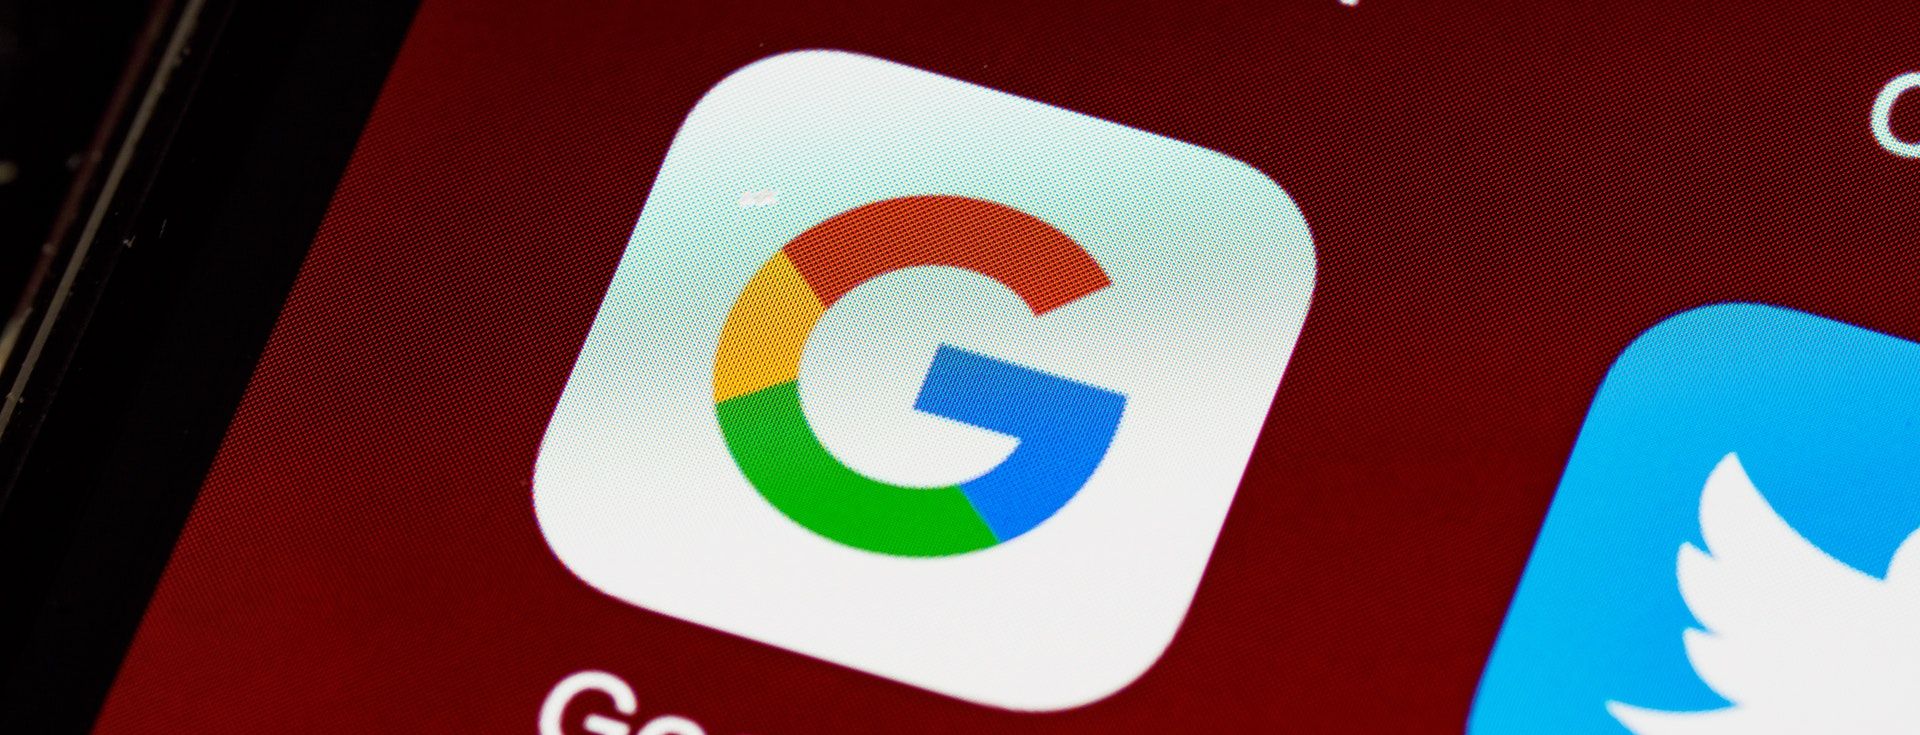 Google va racheter Mandiant pour 5,4 milliards de dollars